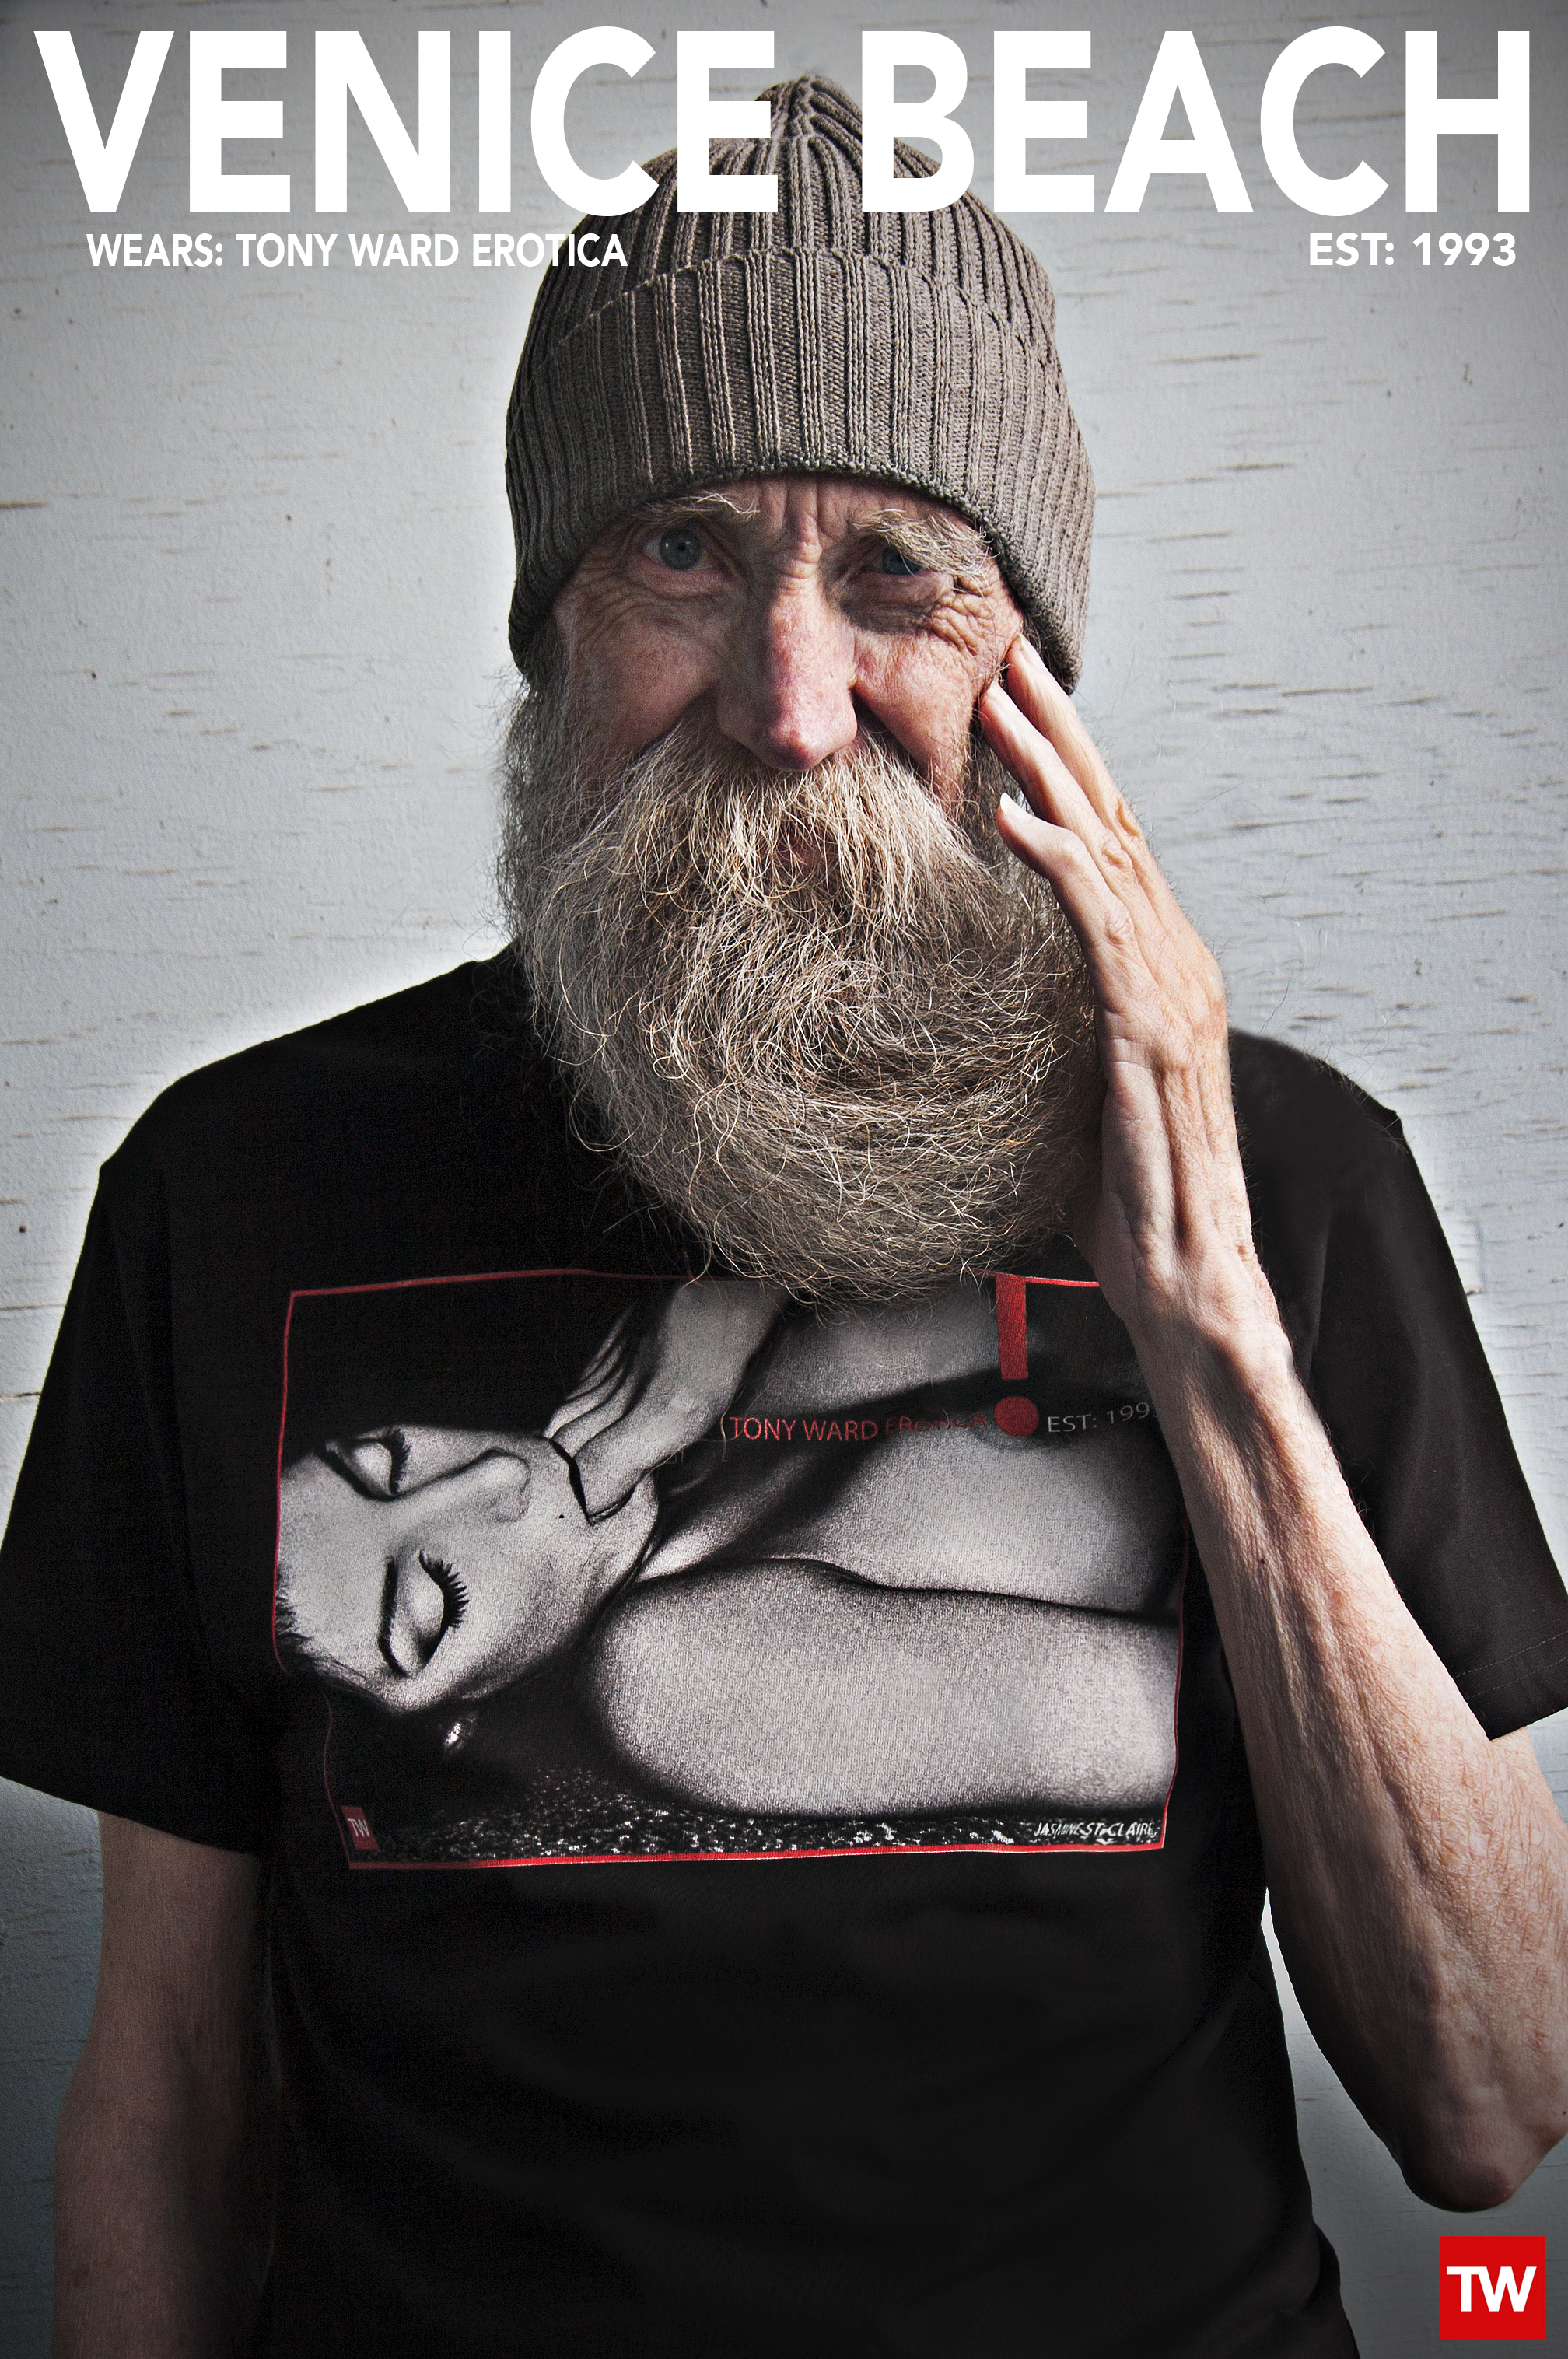 Tony_Ward_erotica_t-shirts_venice_beach_california_bearded_men_portraiture_portrait